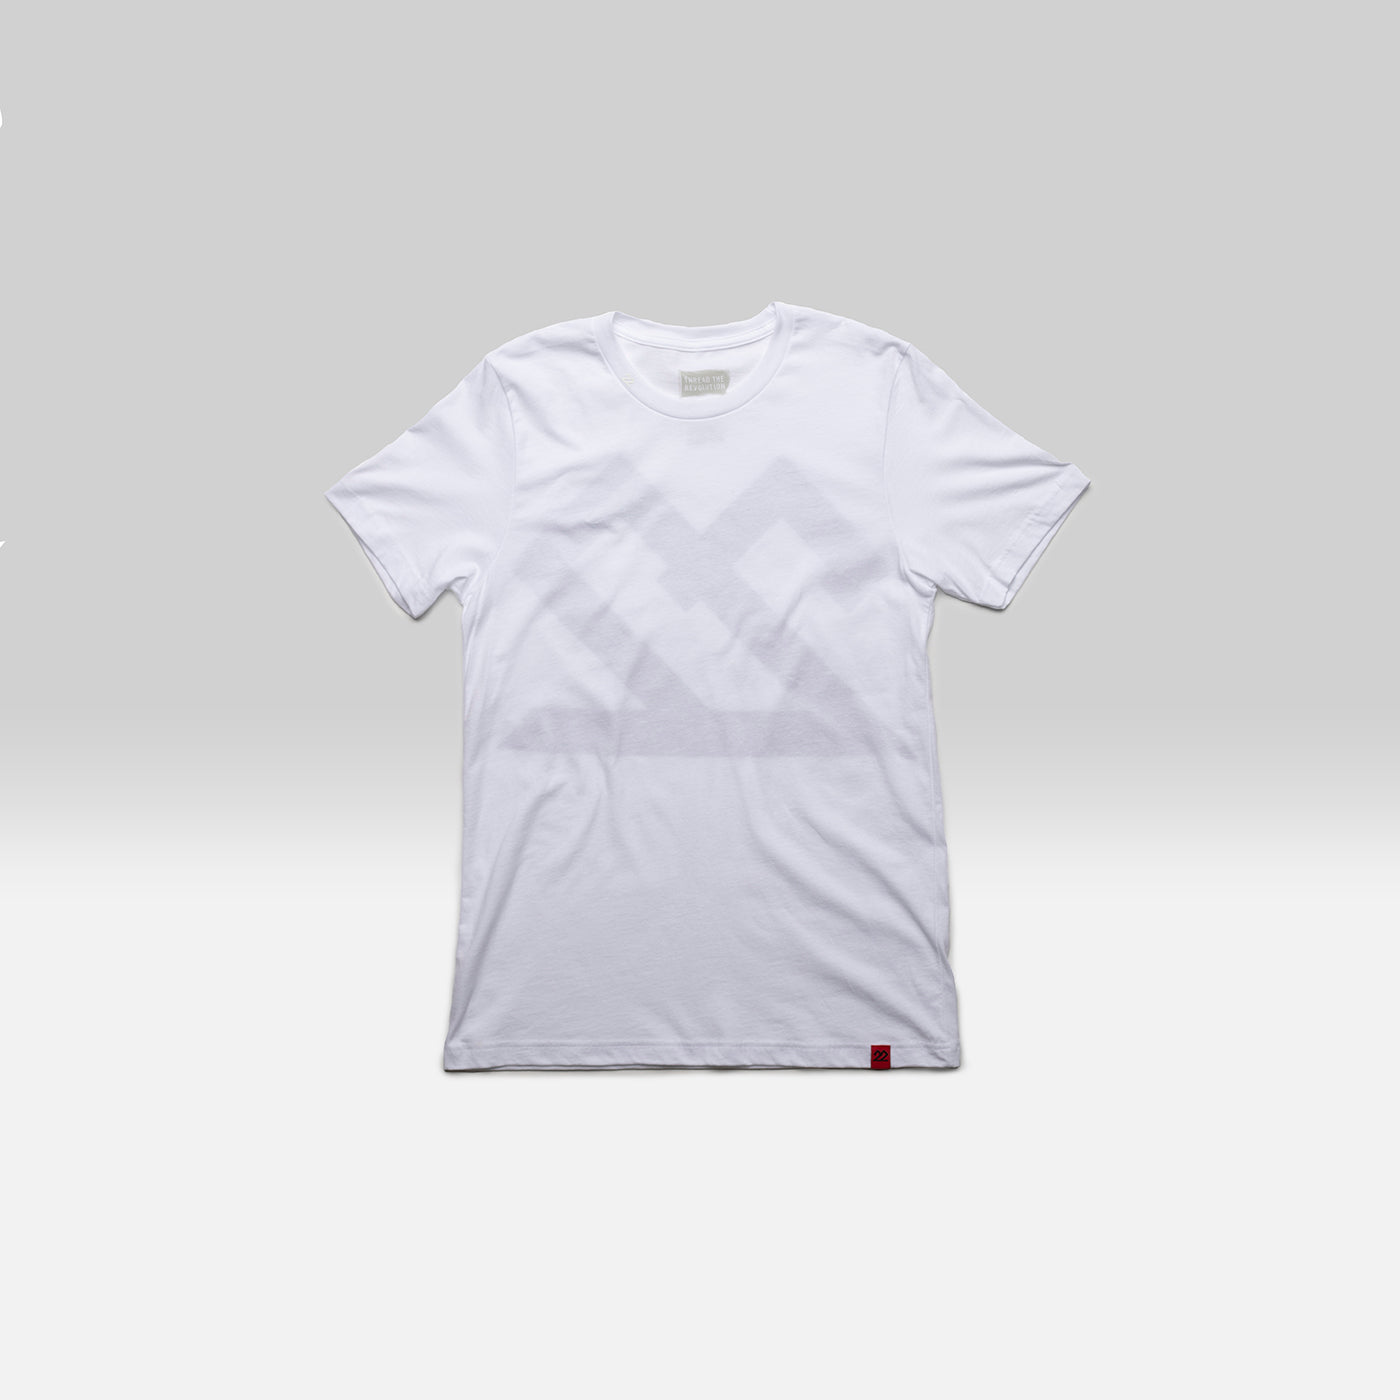 Whiteout T-shirt